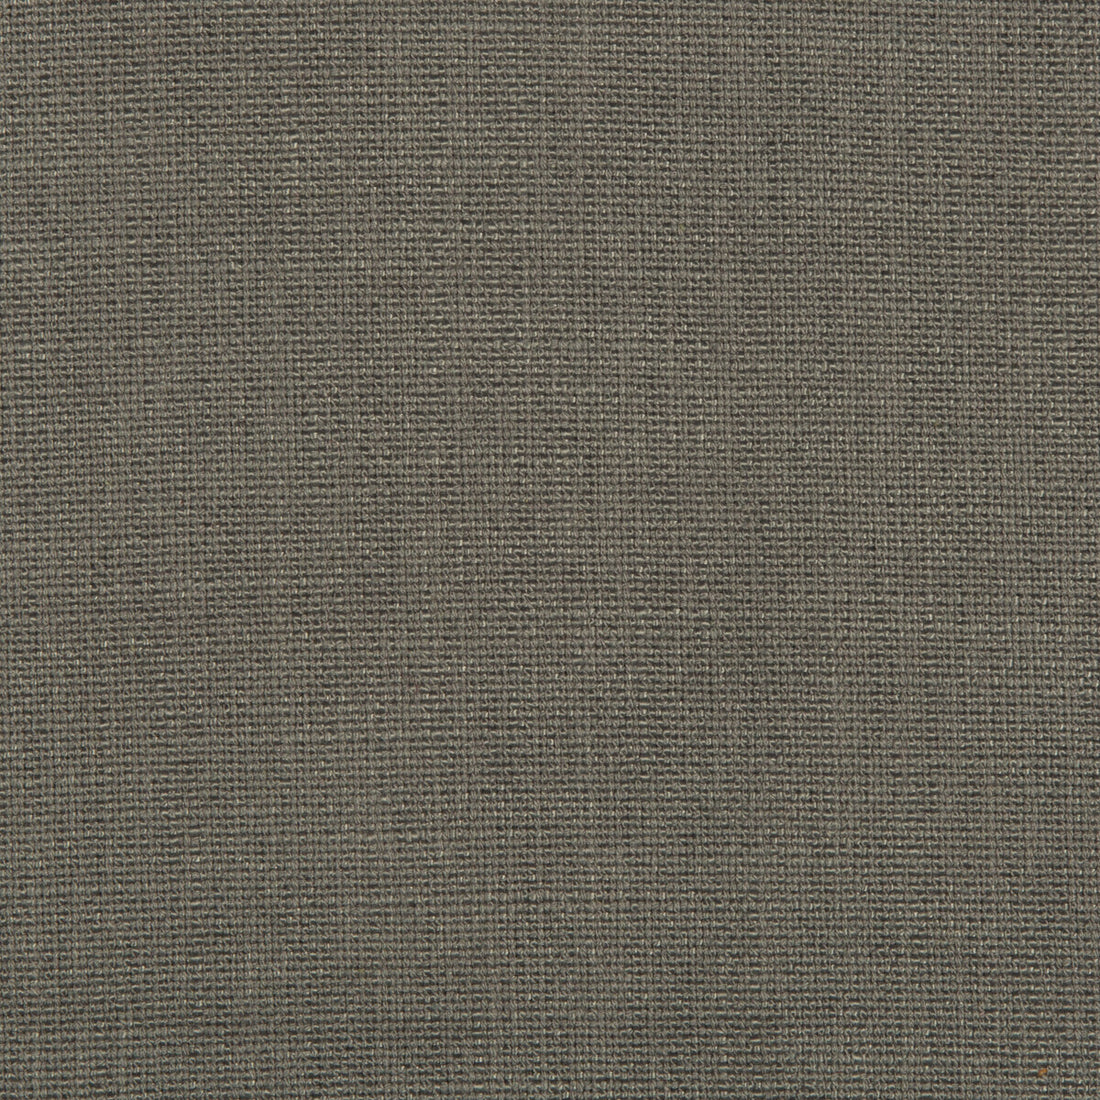 Kravet Smart fabric in 35226-1121 color - pattern 35226.1121.0 - by Kravet Smart in the Performance Kravetarmor collection